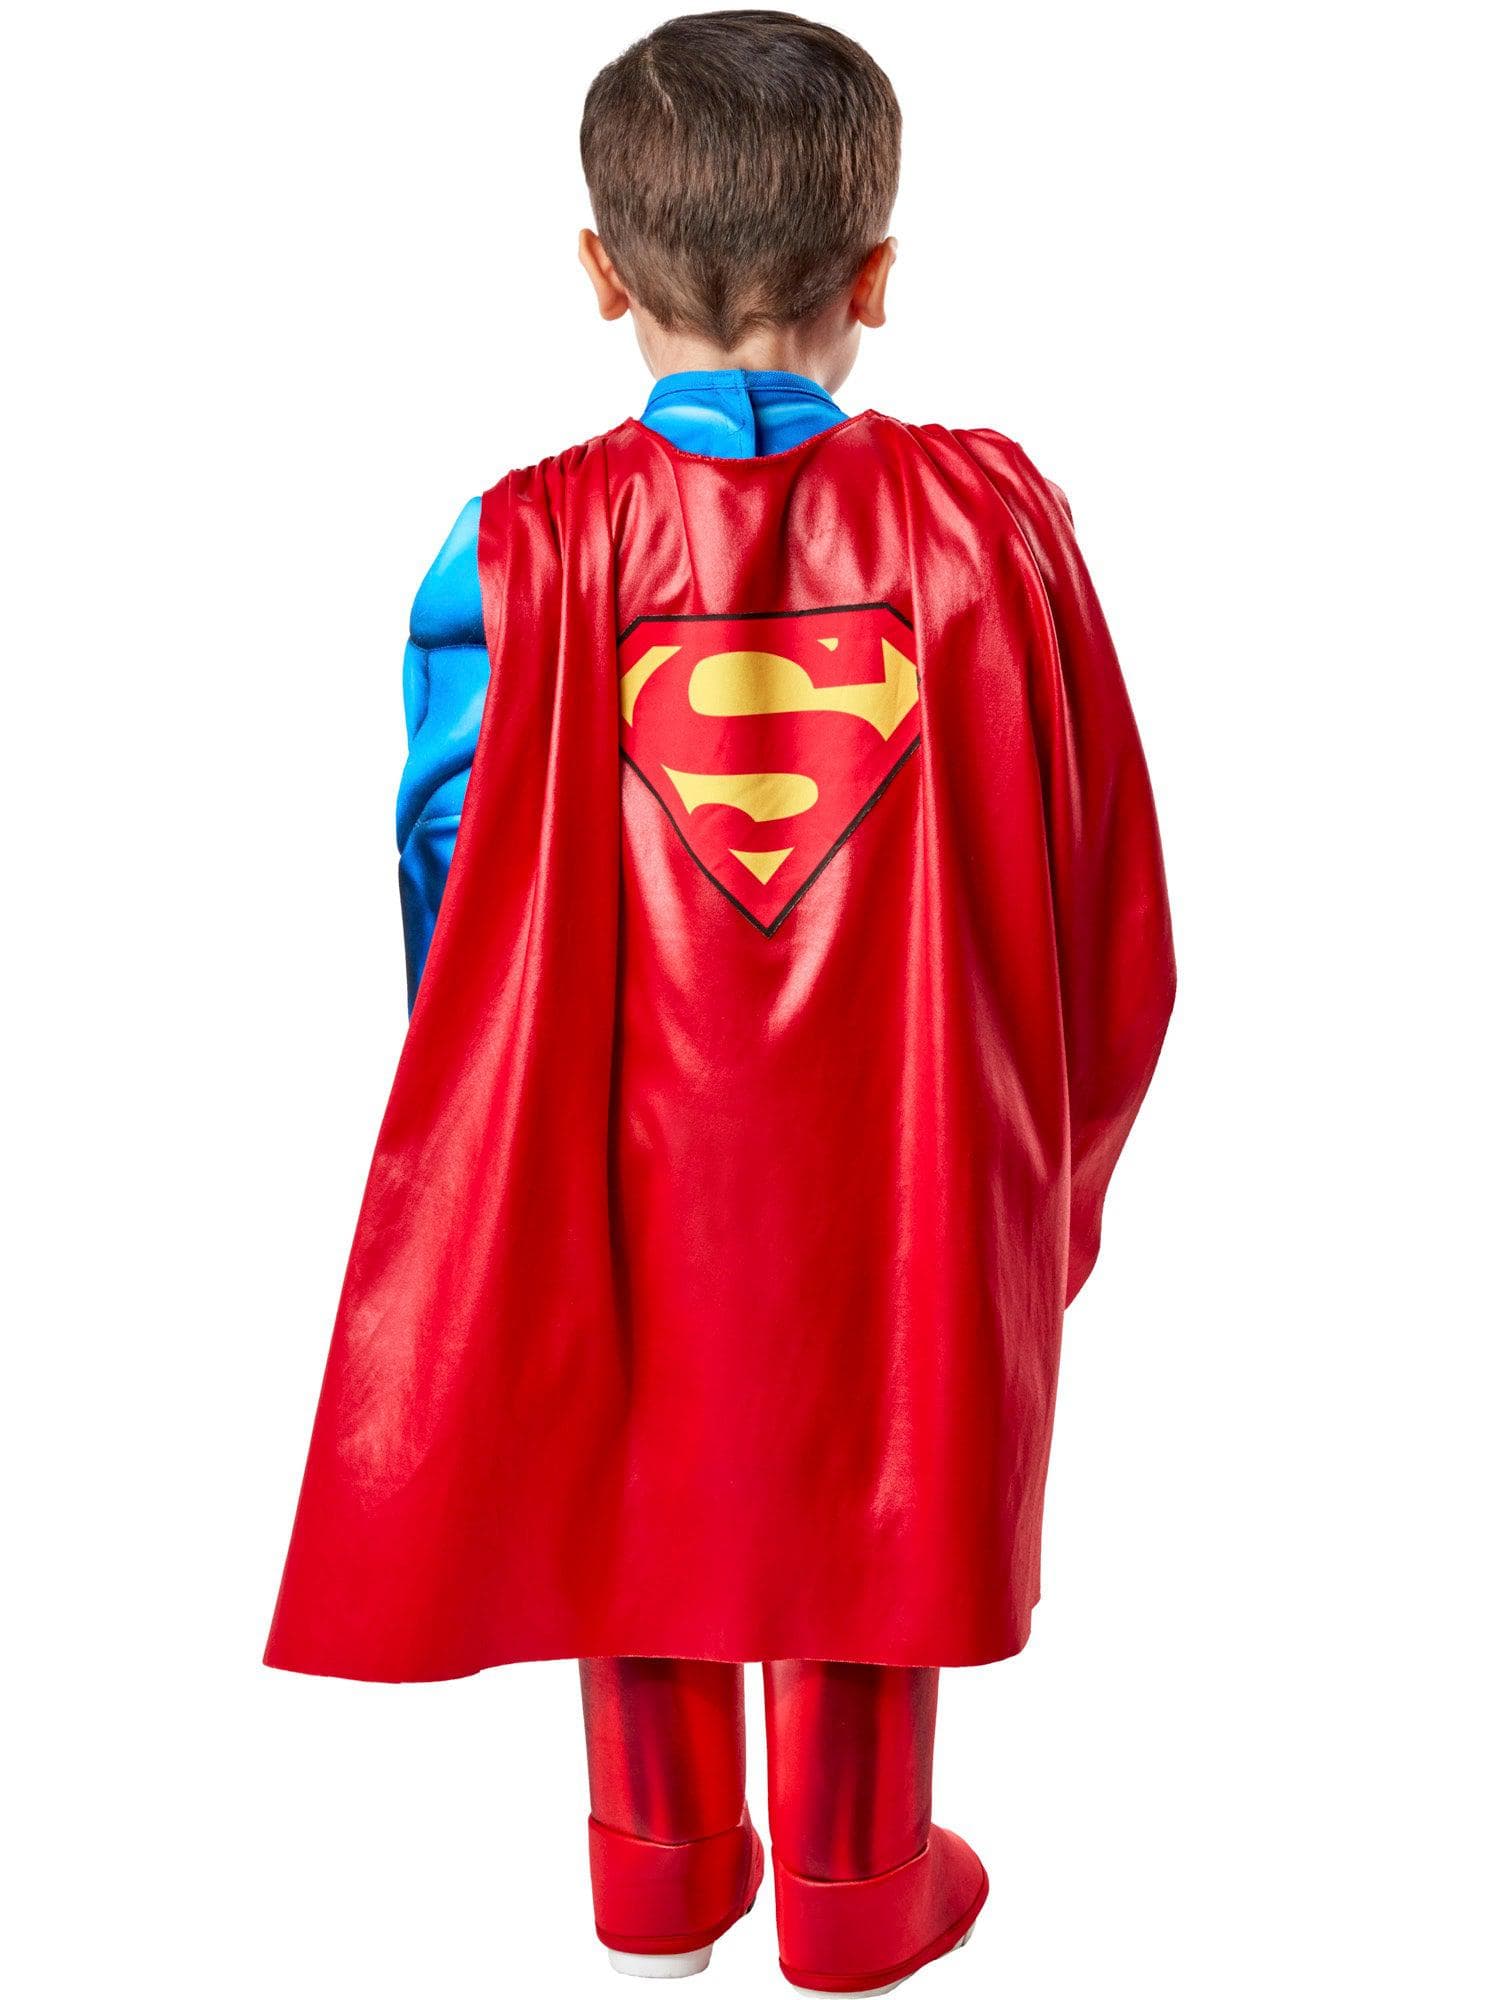 Superman Toddler Costume - costumes.com